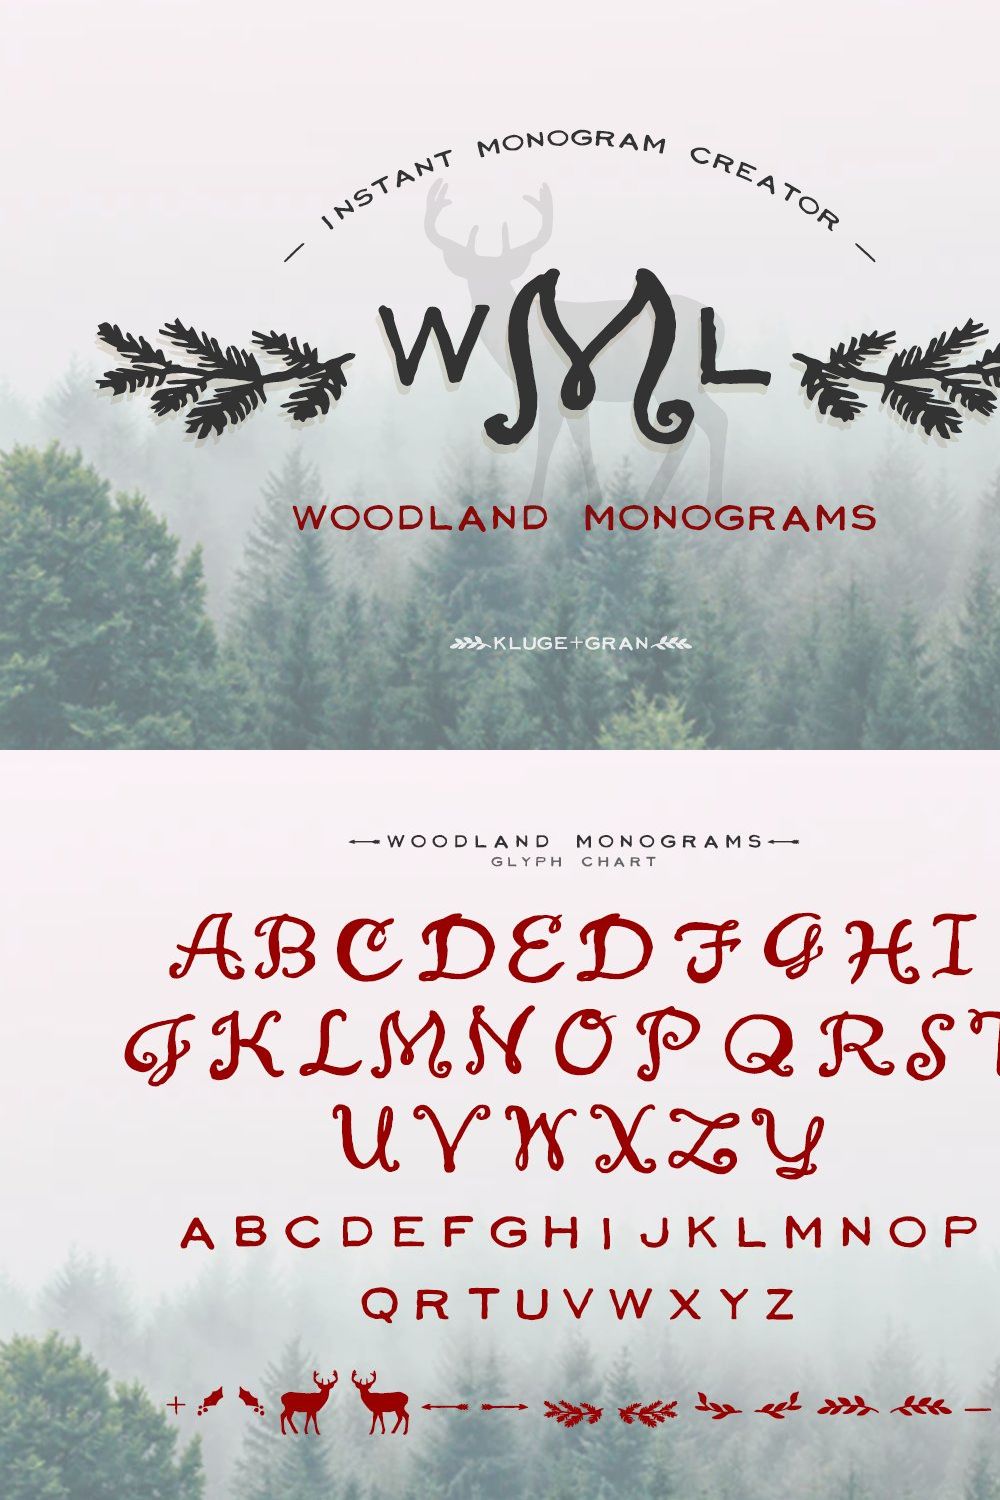 Woodland Monograms Font pinterest preview image.